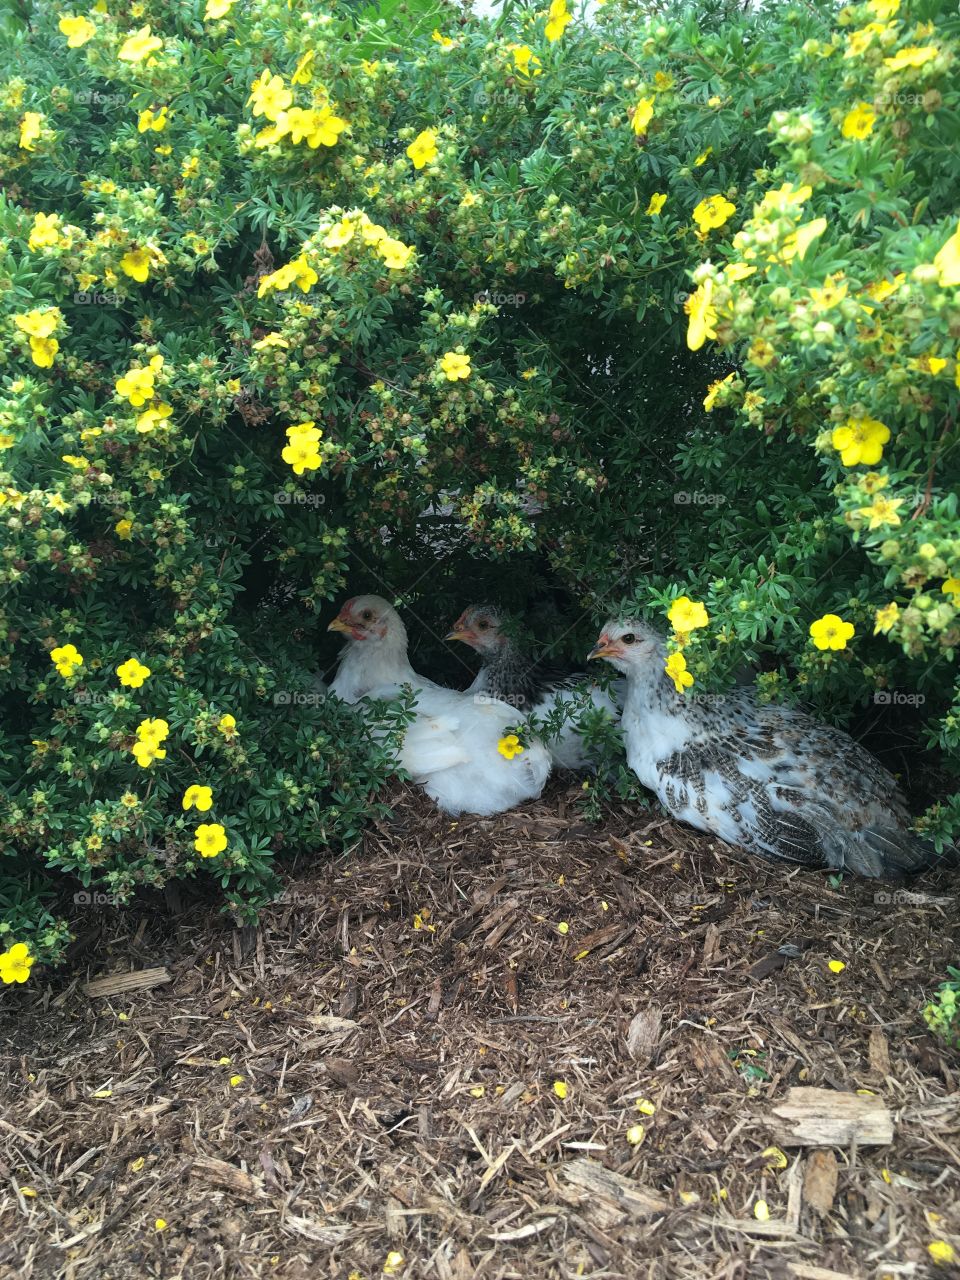 Chicks in my garden!